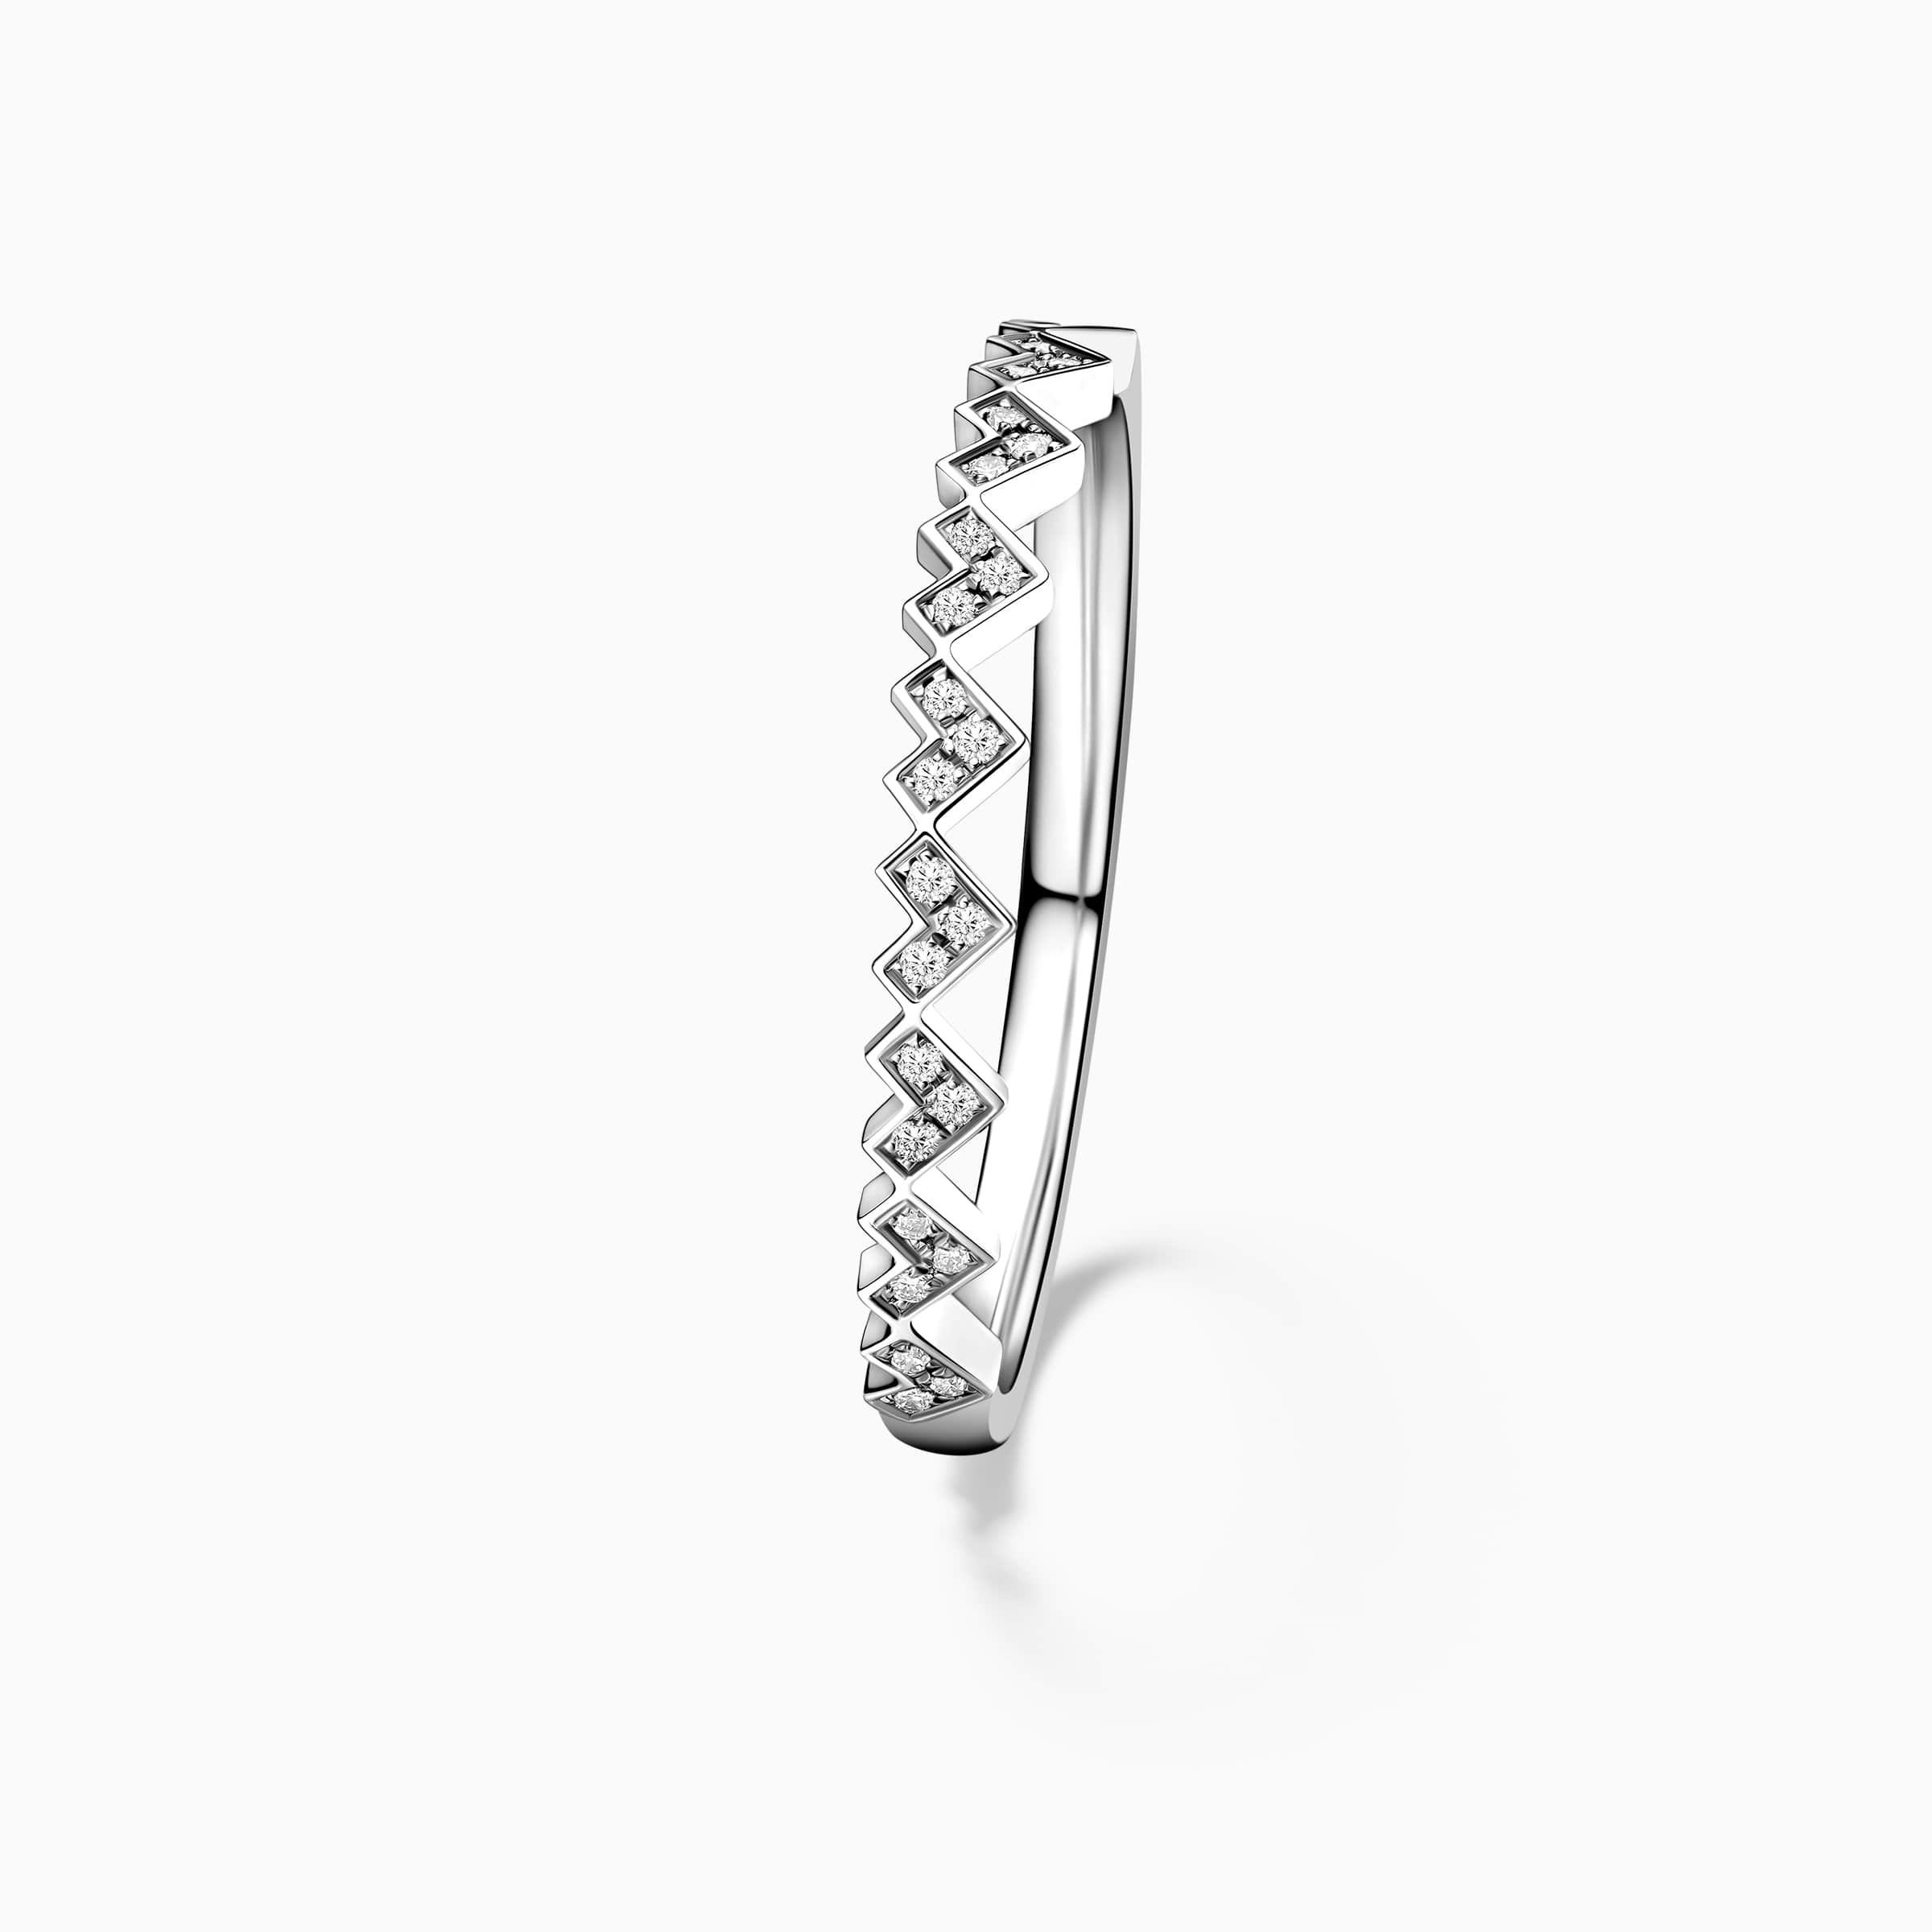 Darry Ring heart shaped diamond wedding ring for women